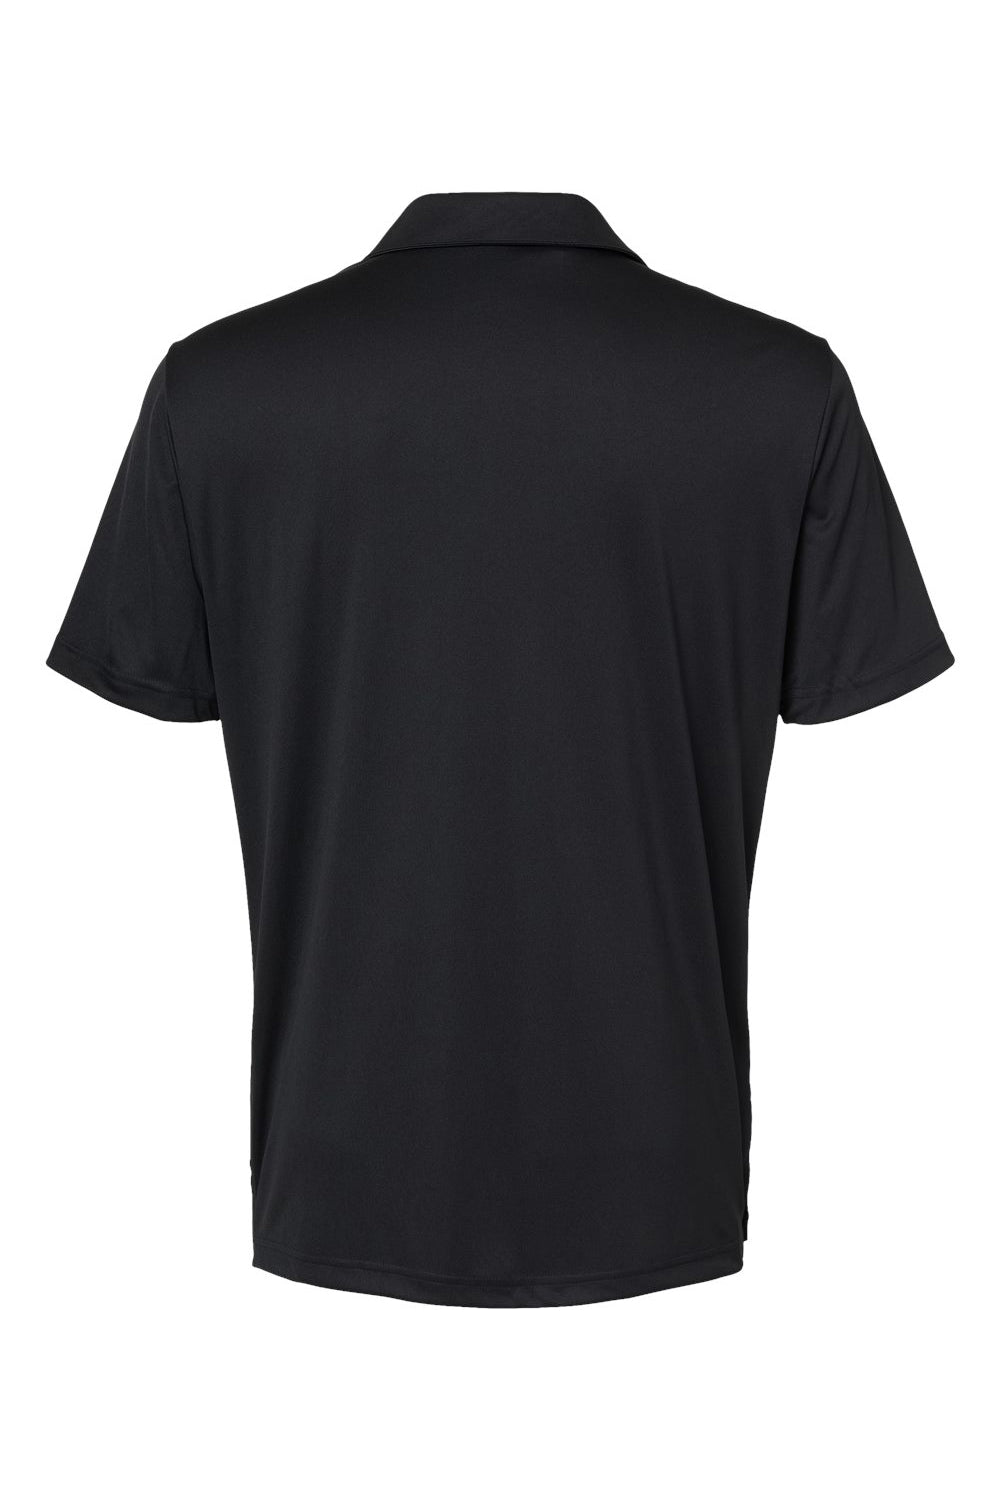 Adidas A324 Mens 3 Stripes UPF 50+ Short Sleeve Polo Shirt Black Flat Back